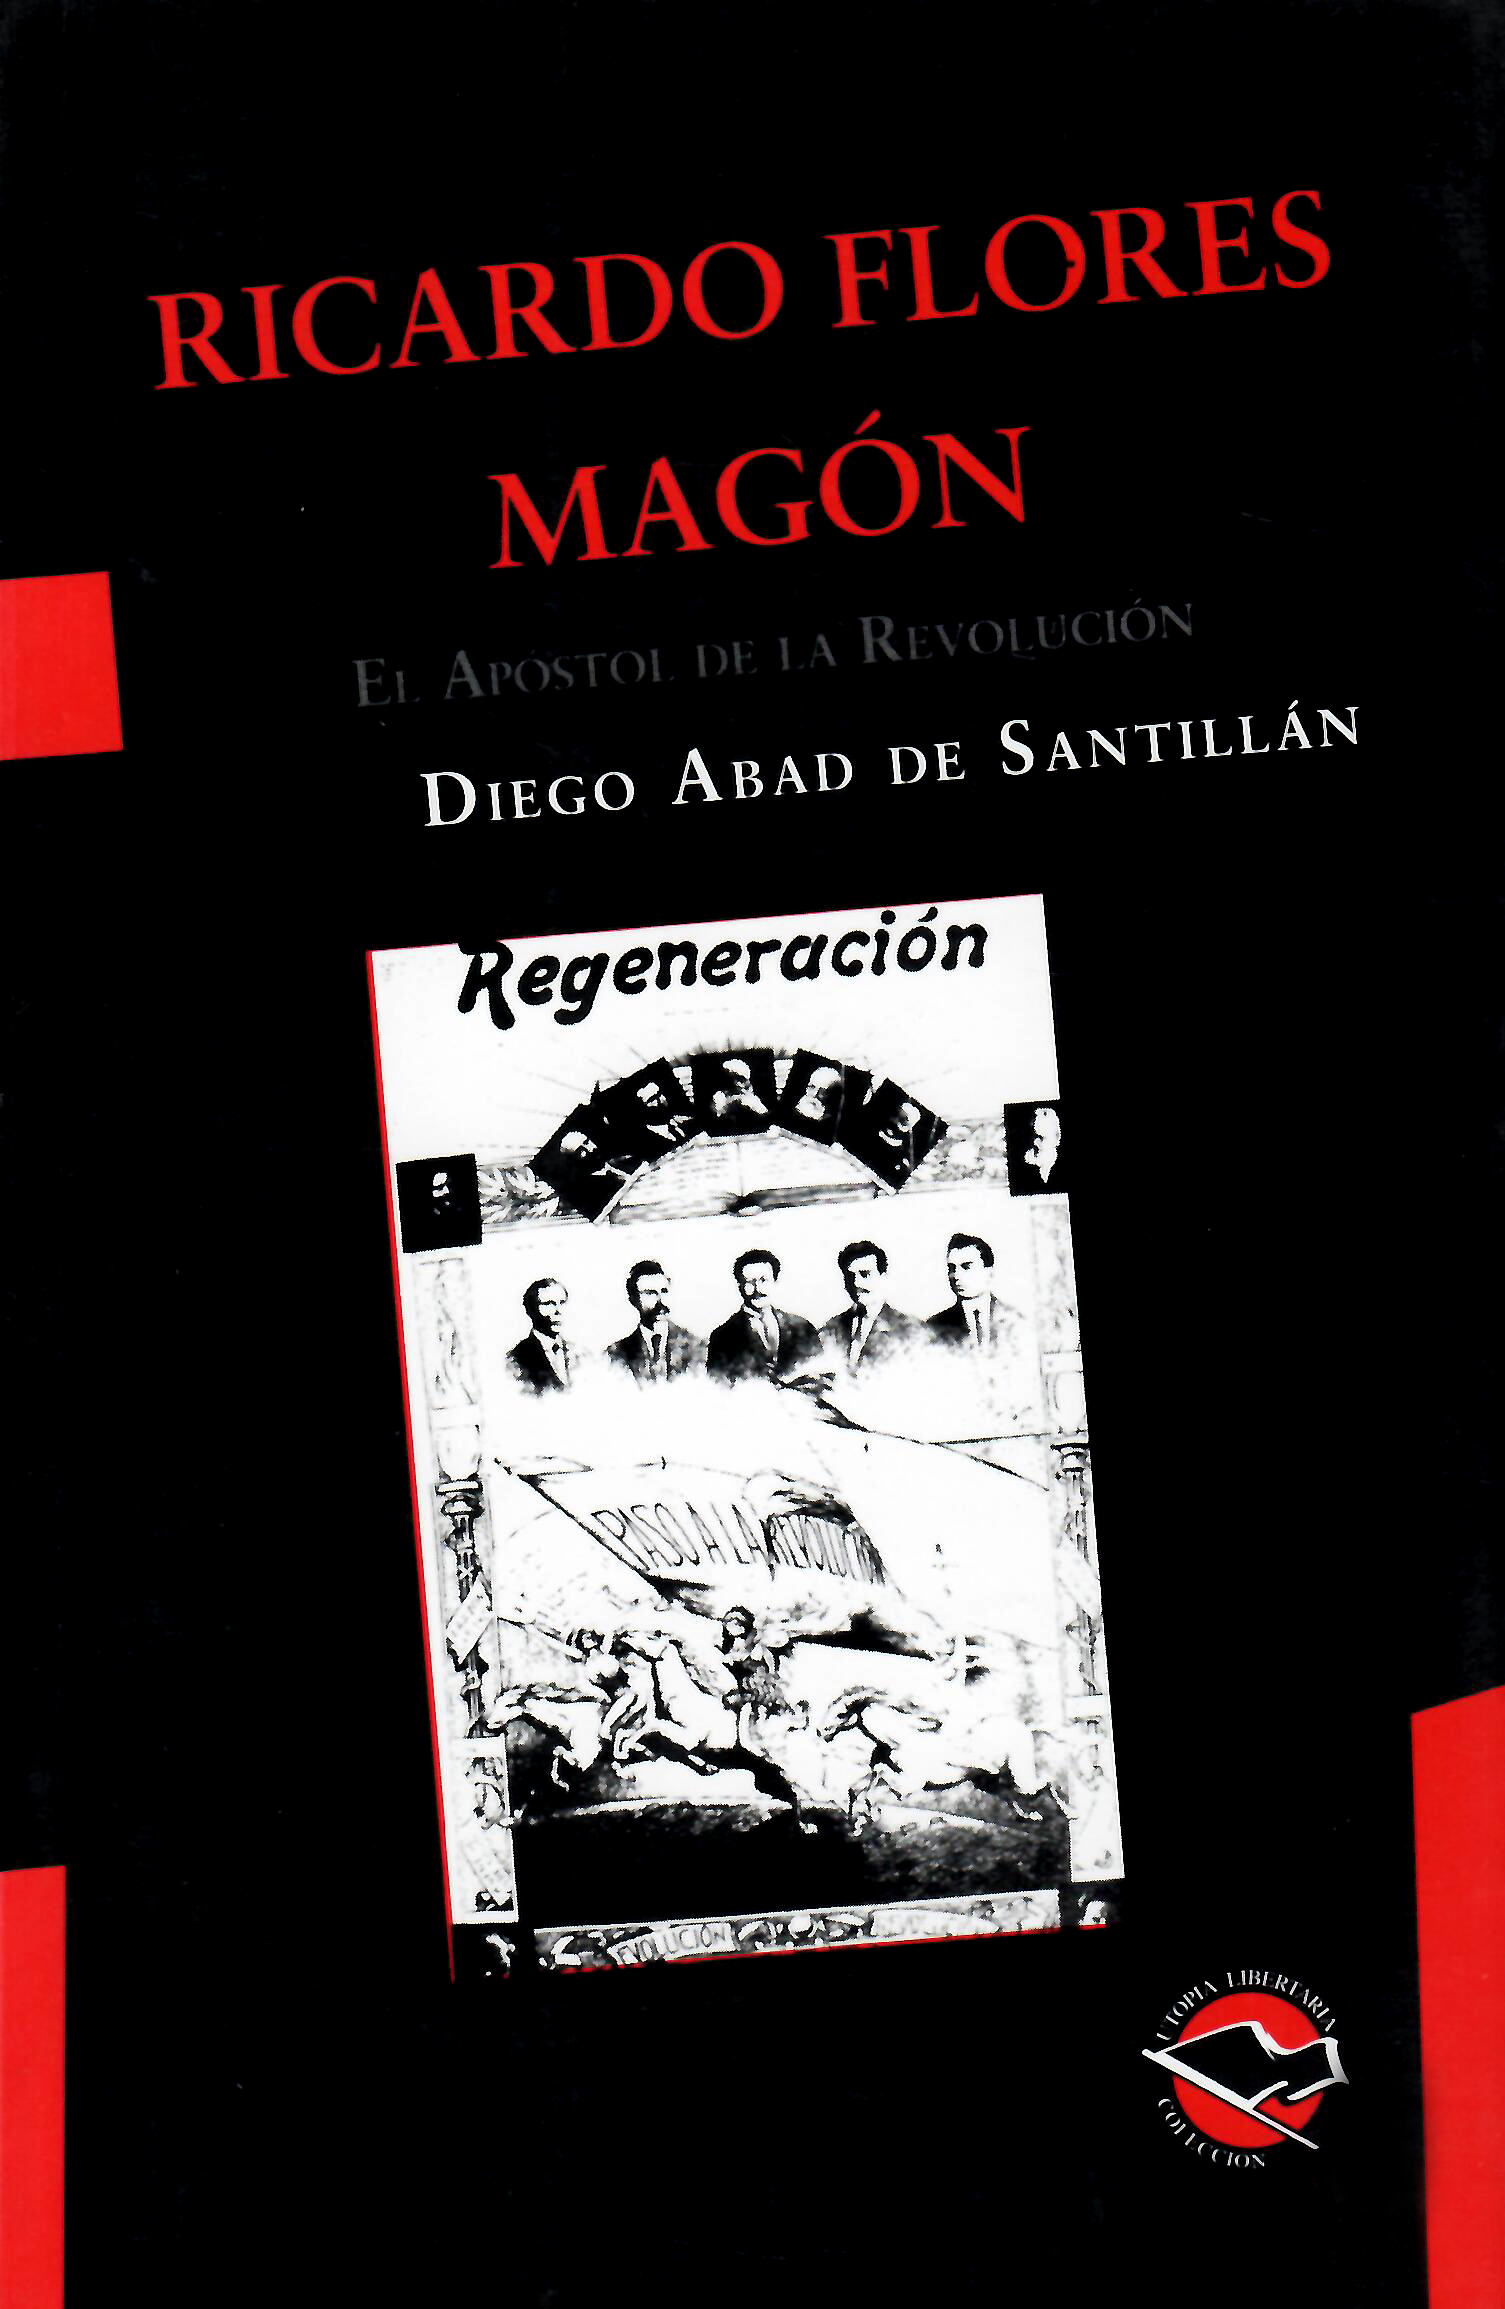 RICARDO FLORES MAGÓN - Diego Abad De Santillán